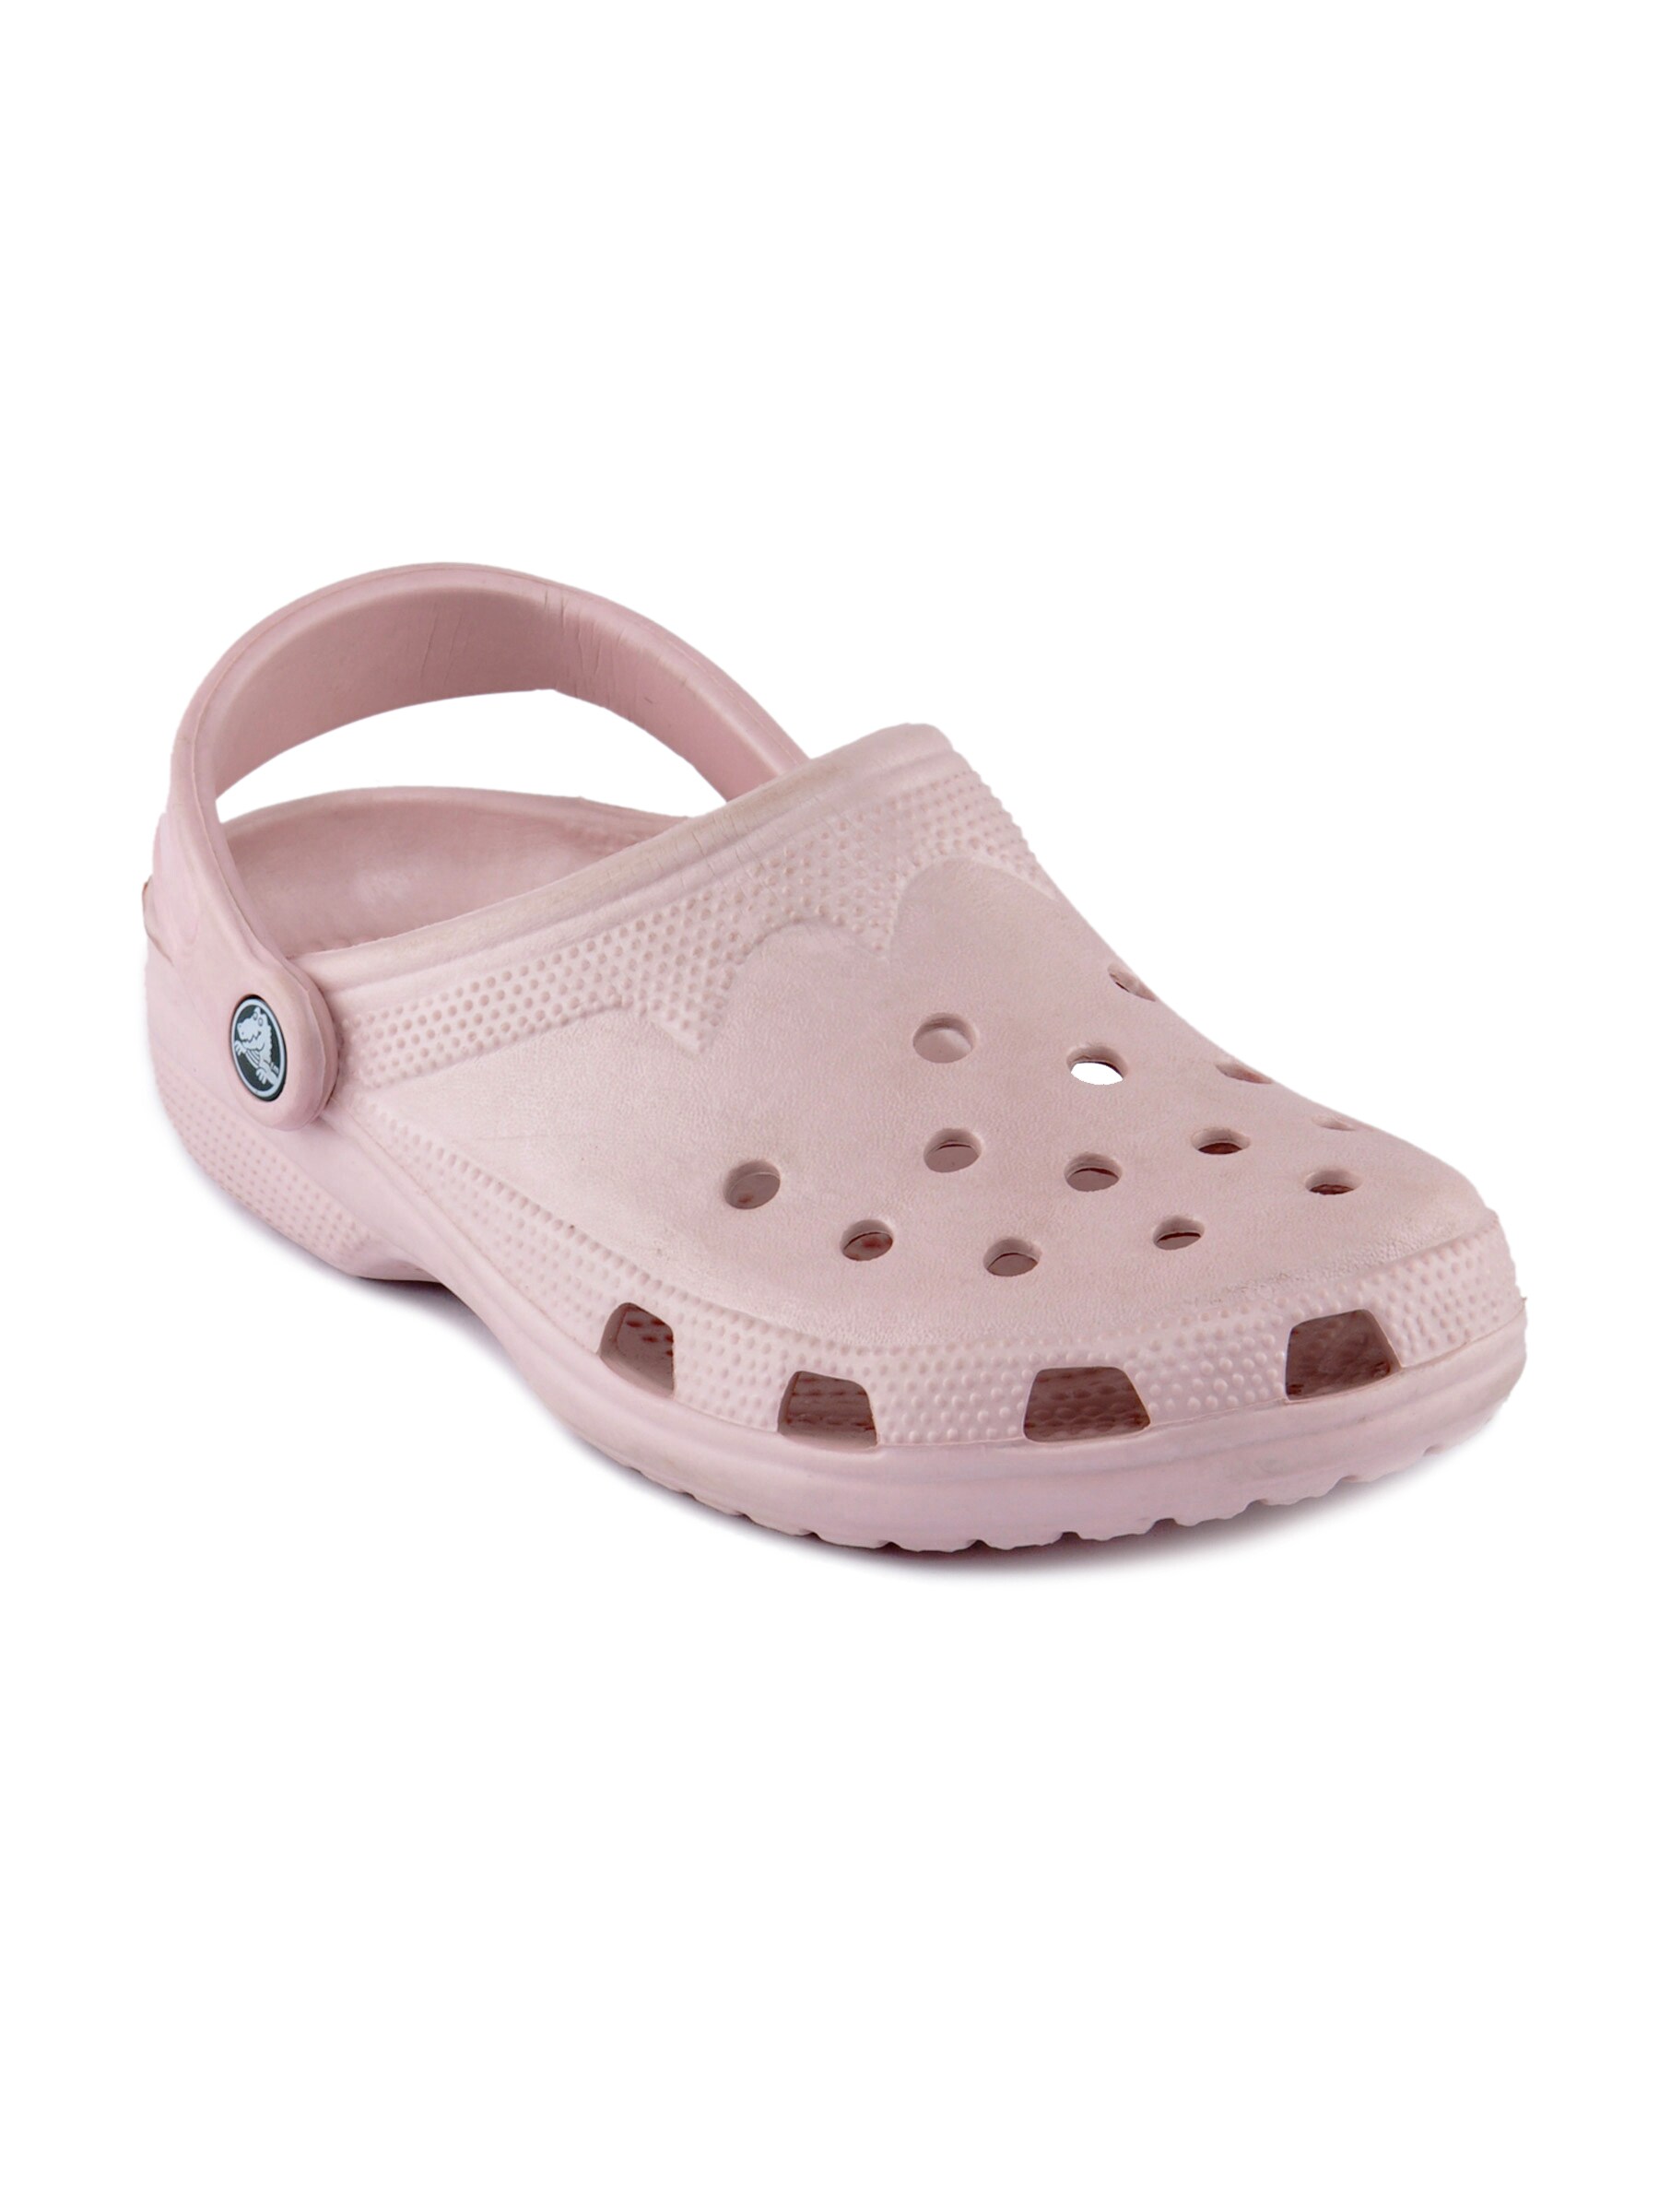 Crocs Beach Unisex Pink Sandal